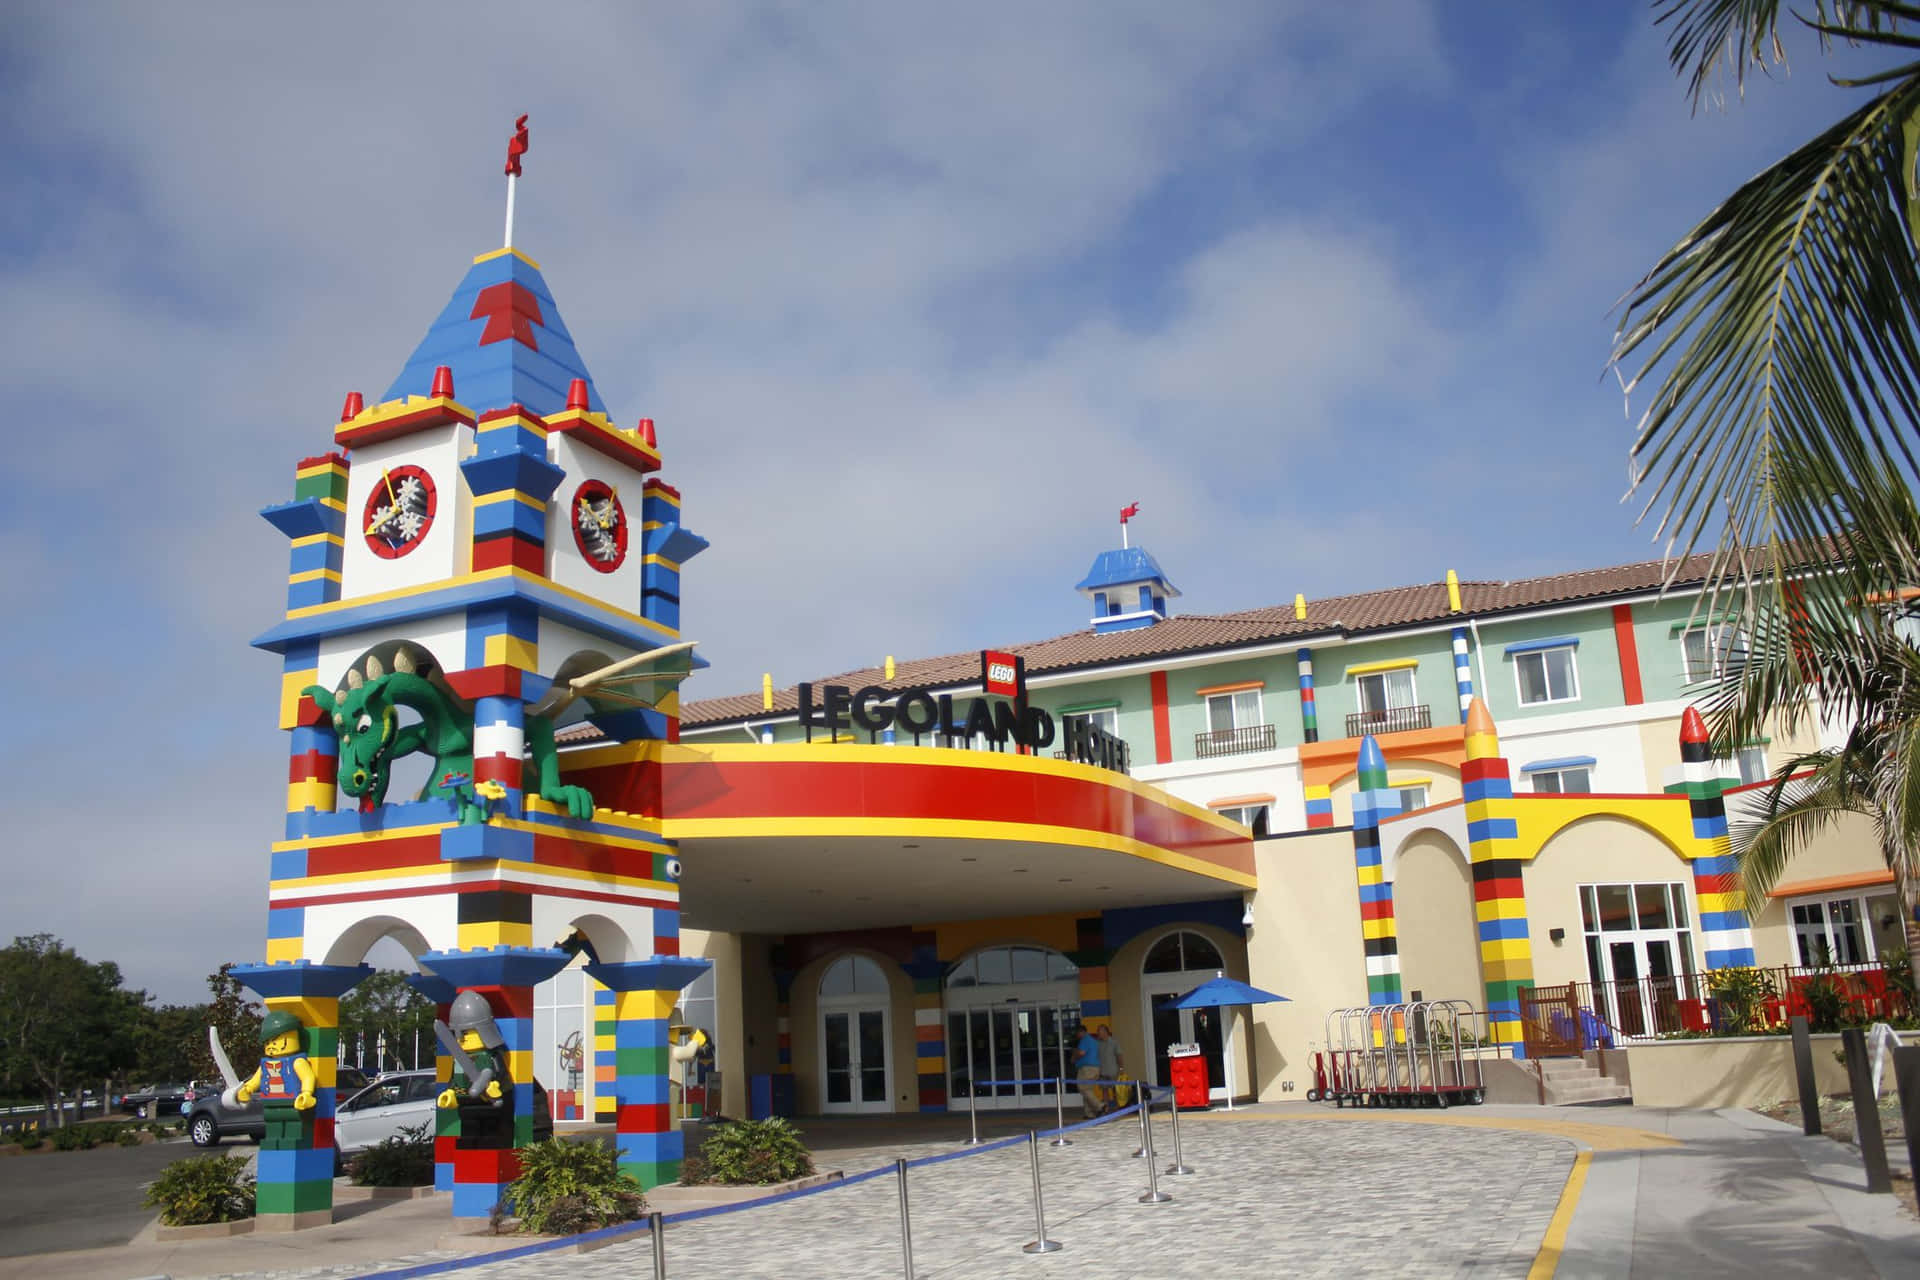 Share The Fun And Explore The World Of Legoland!